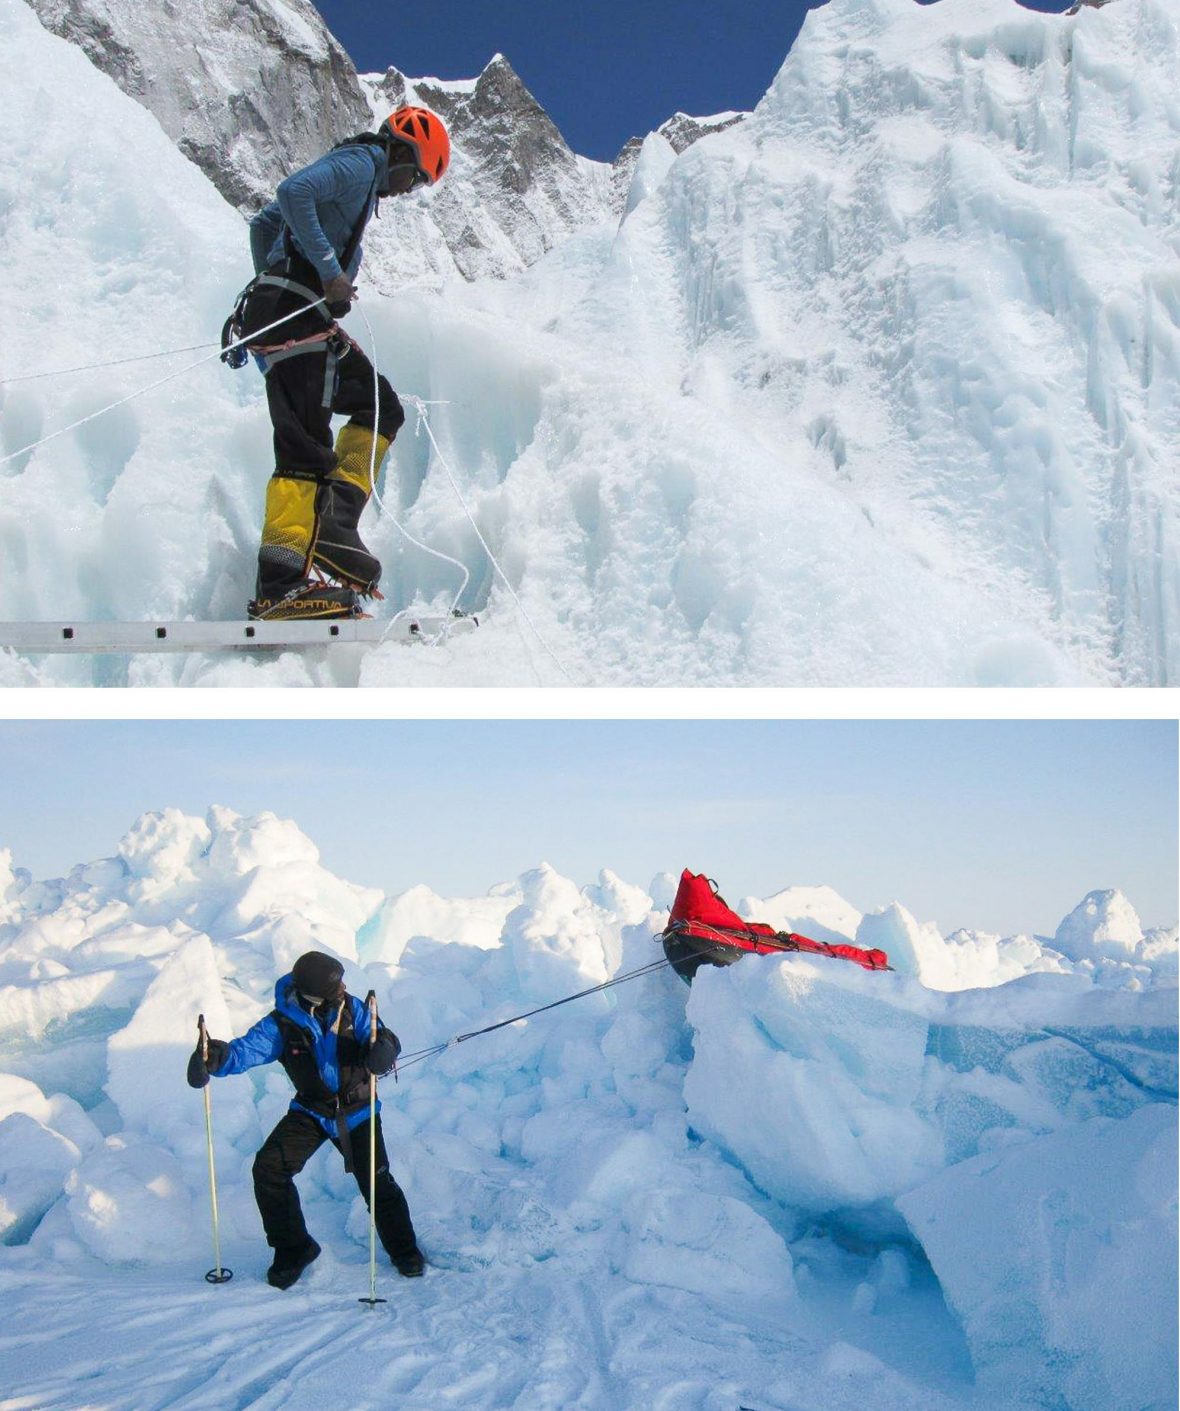 Two photos showing Sibusiso traversing snow in climbing gear.